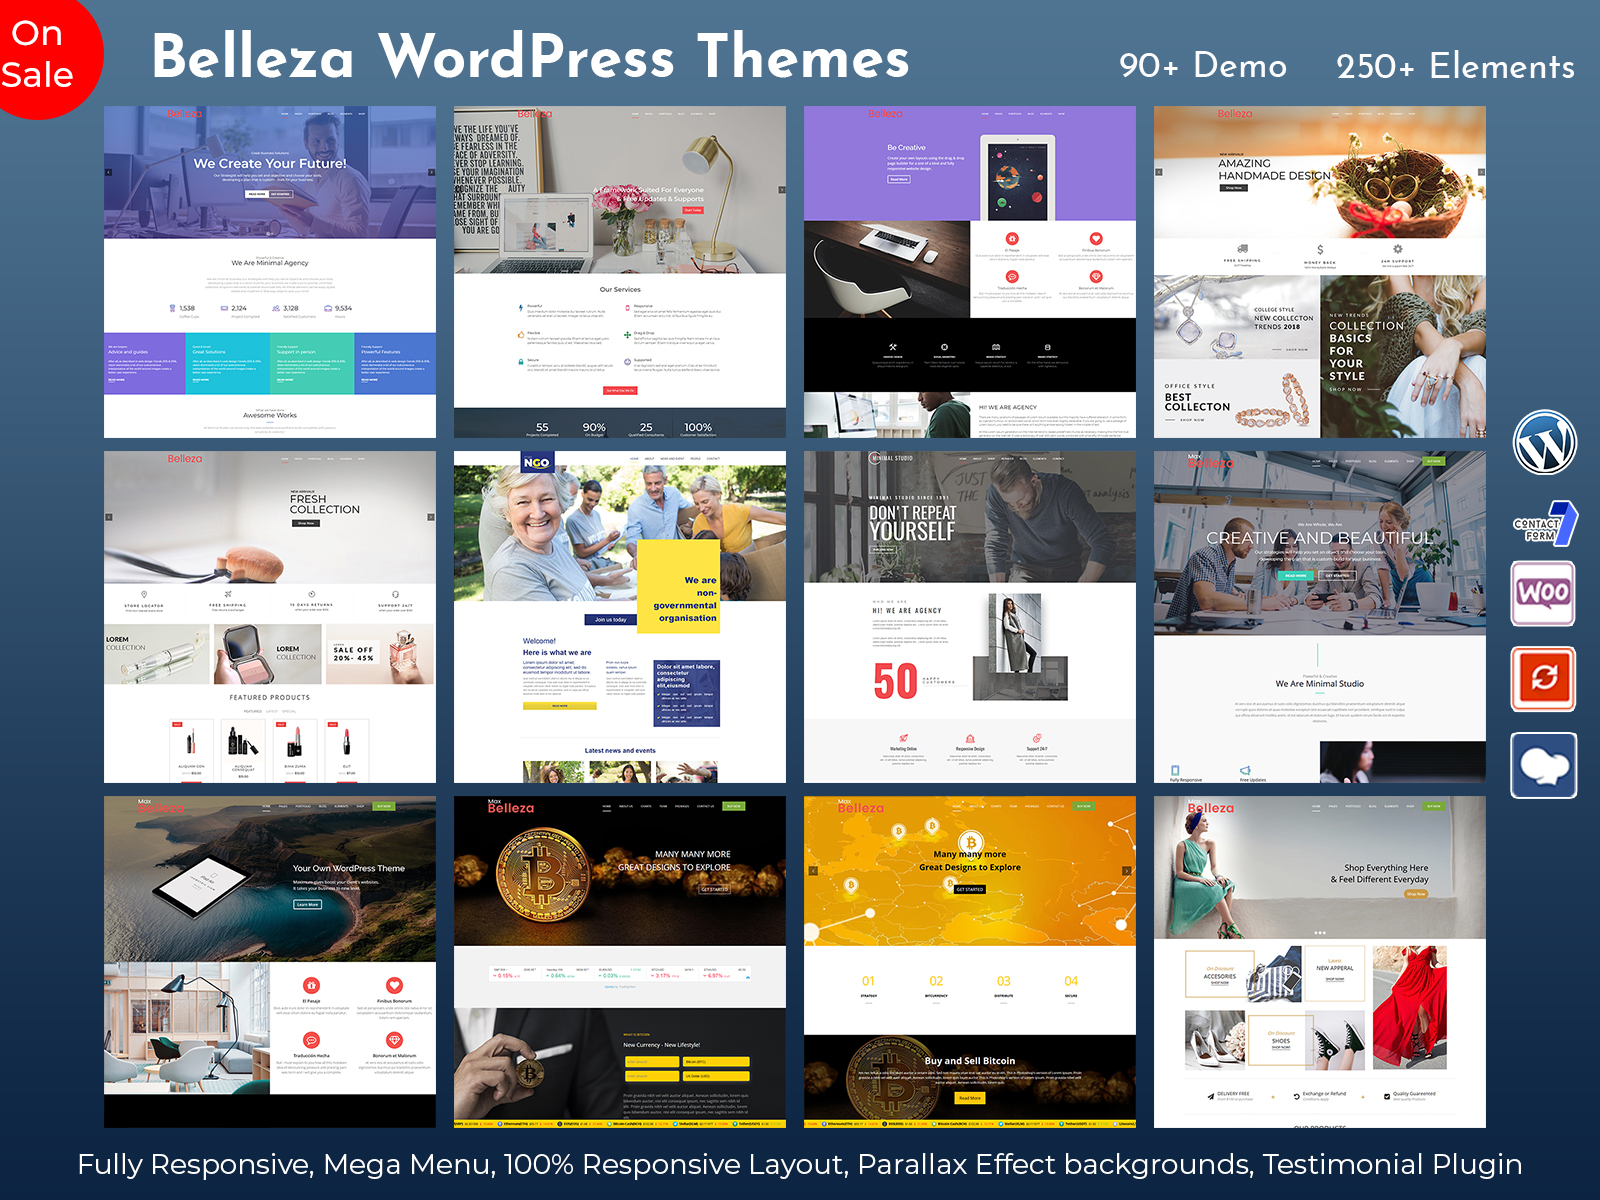 Business WordPress Theme